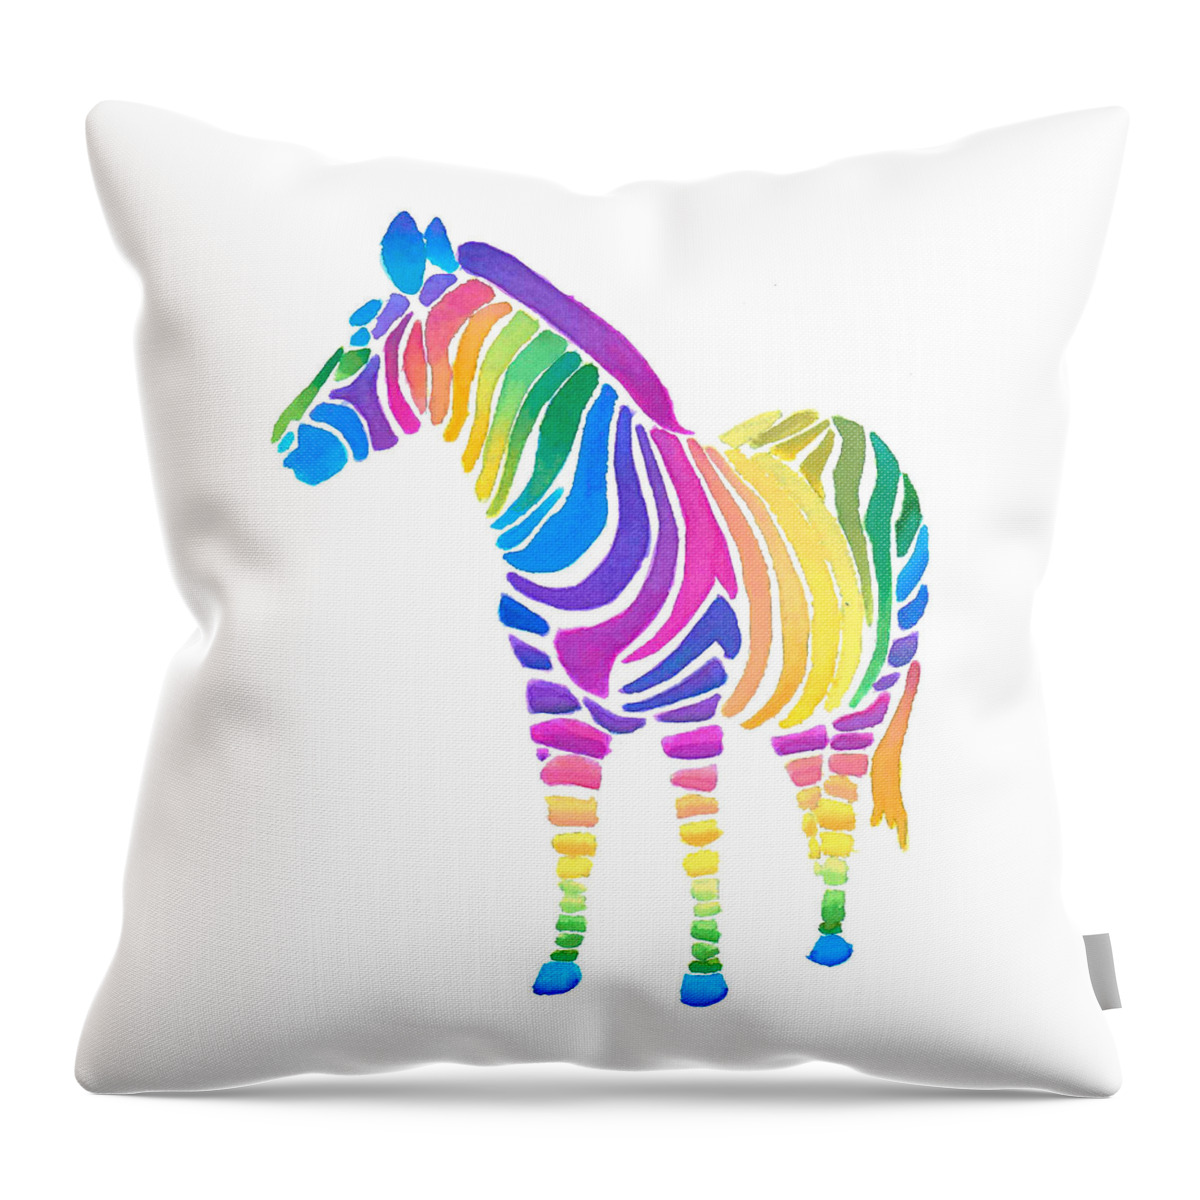  Art Throw Pillow featuring the painting Rainbow Zebra by Sarah Krafft